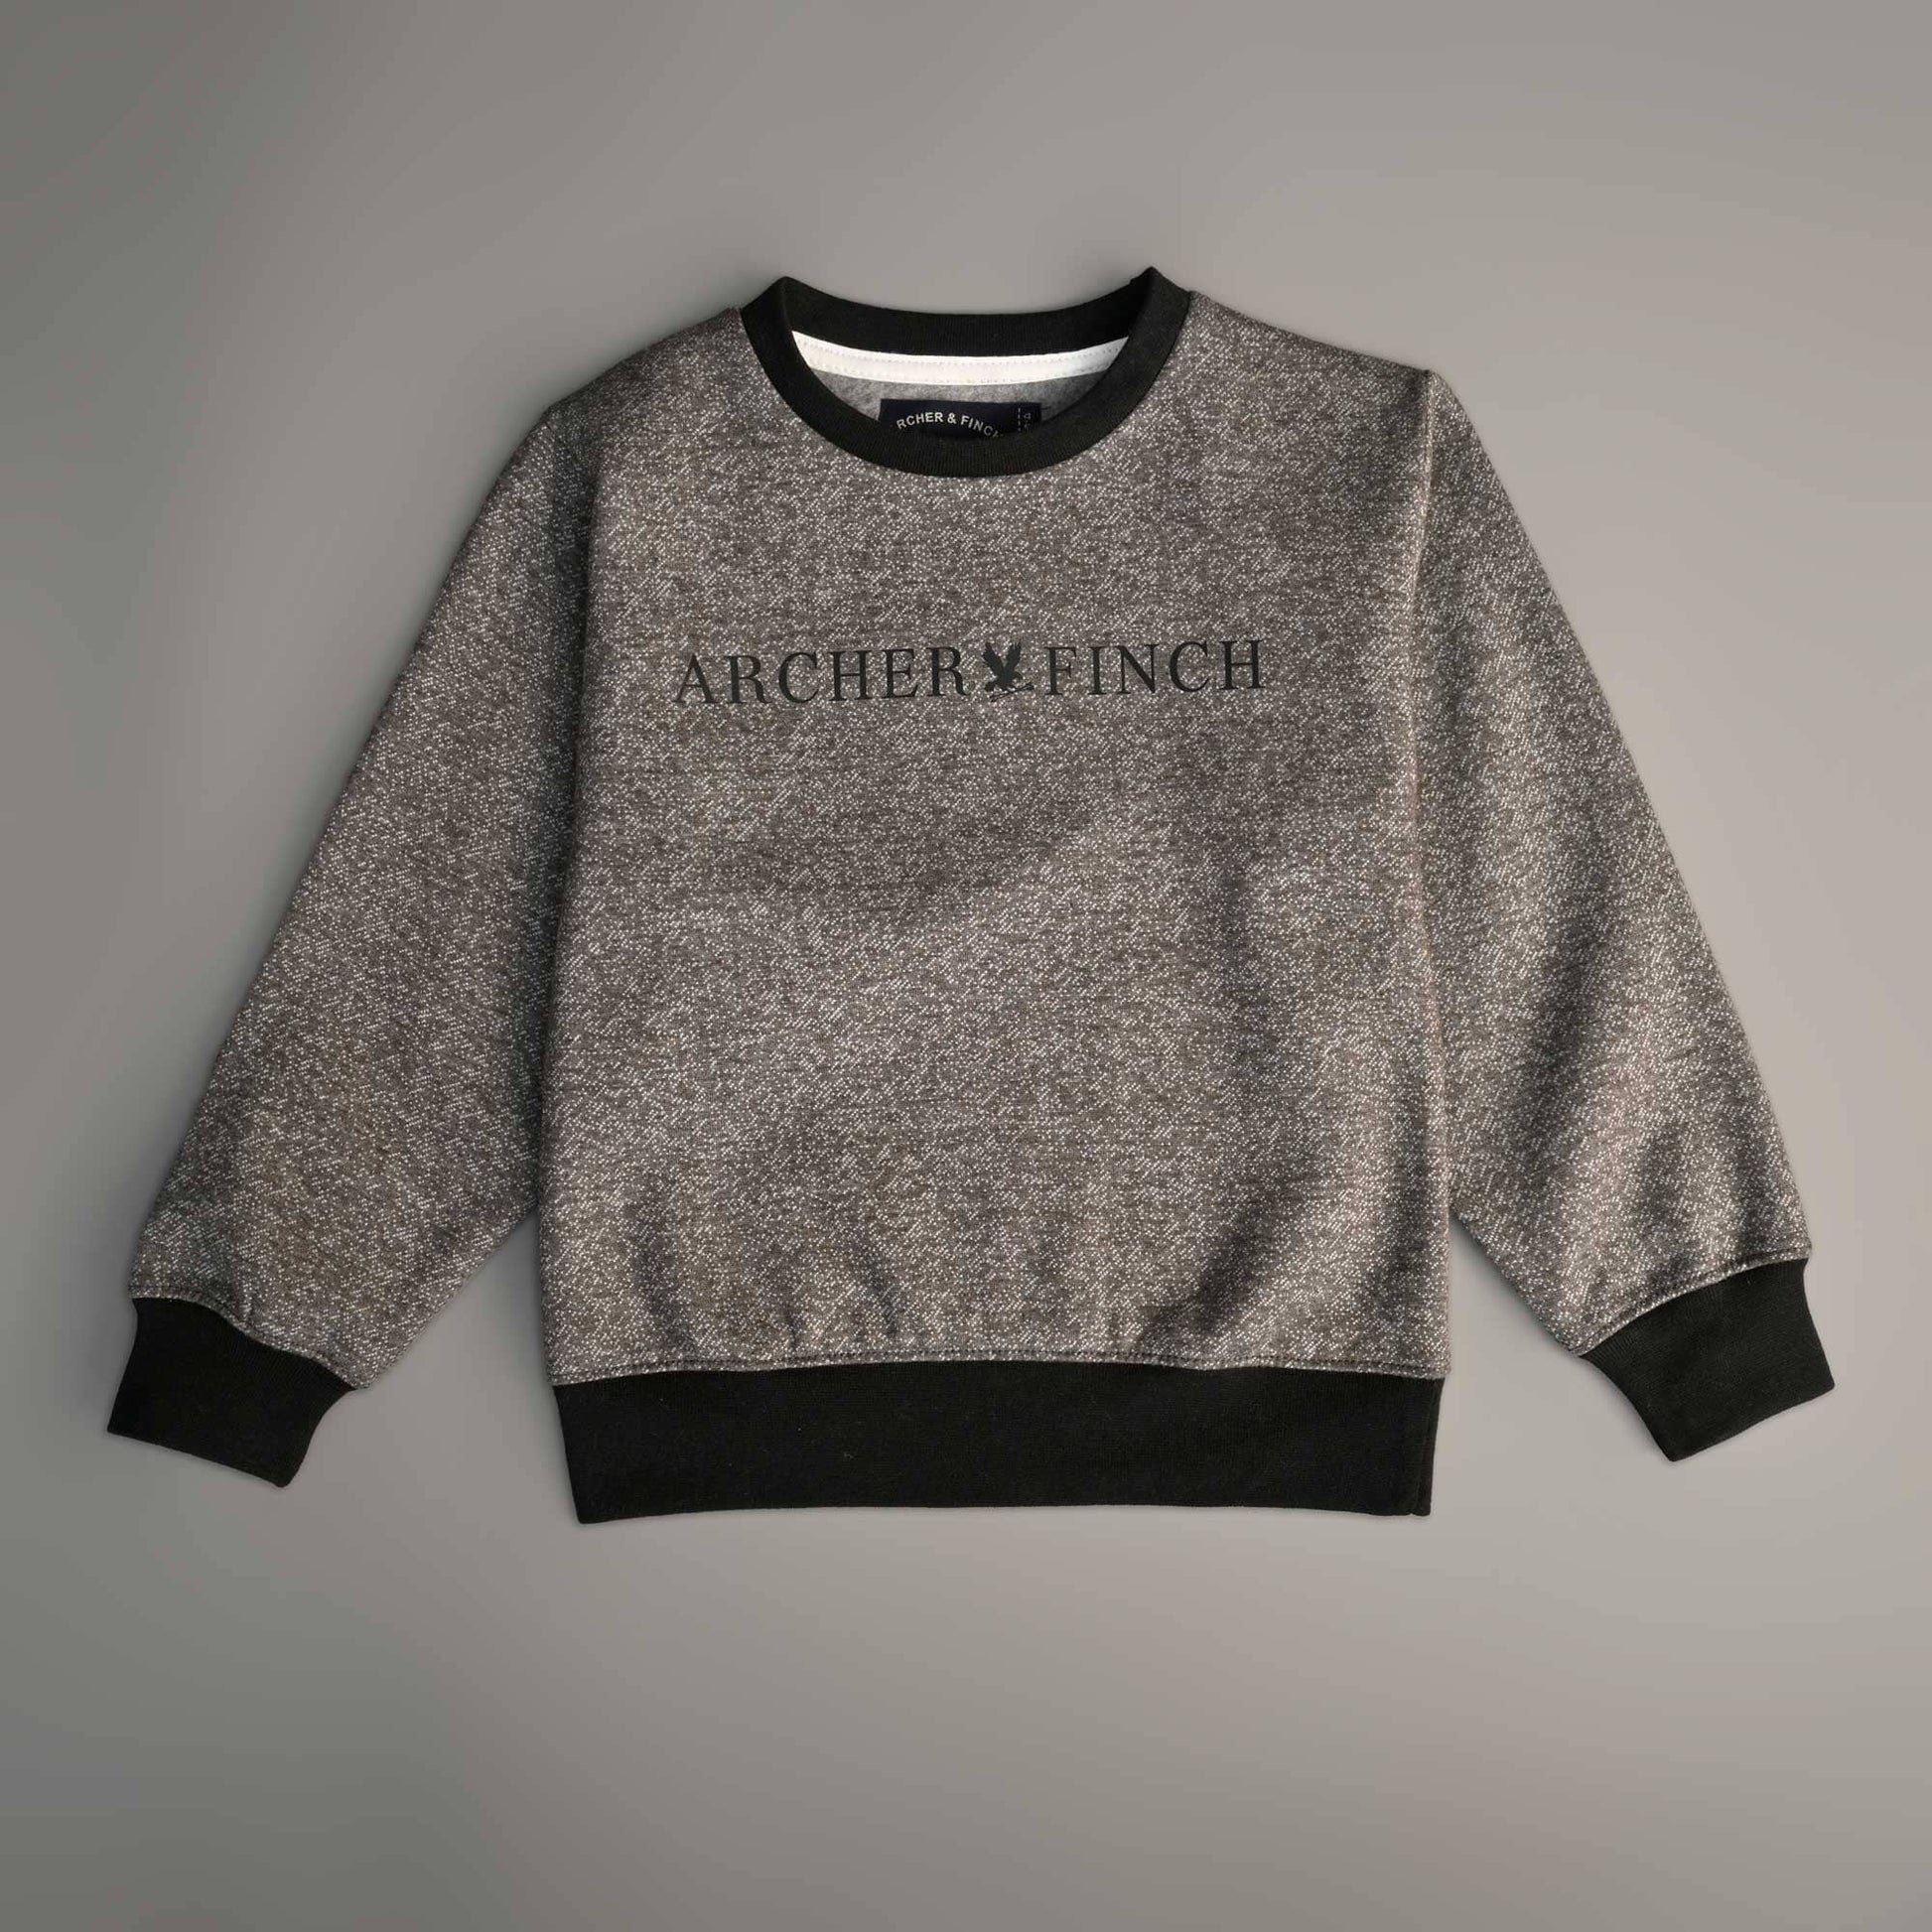 A&F Boy's Archer & Finch Printed Fleece Sweat Shirt Boy's Sweat Shirt LFS Charcoal 3-4 Years 